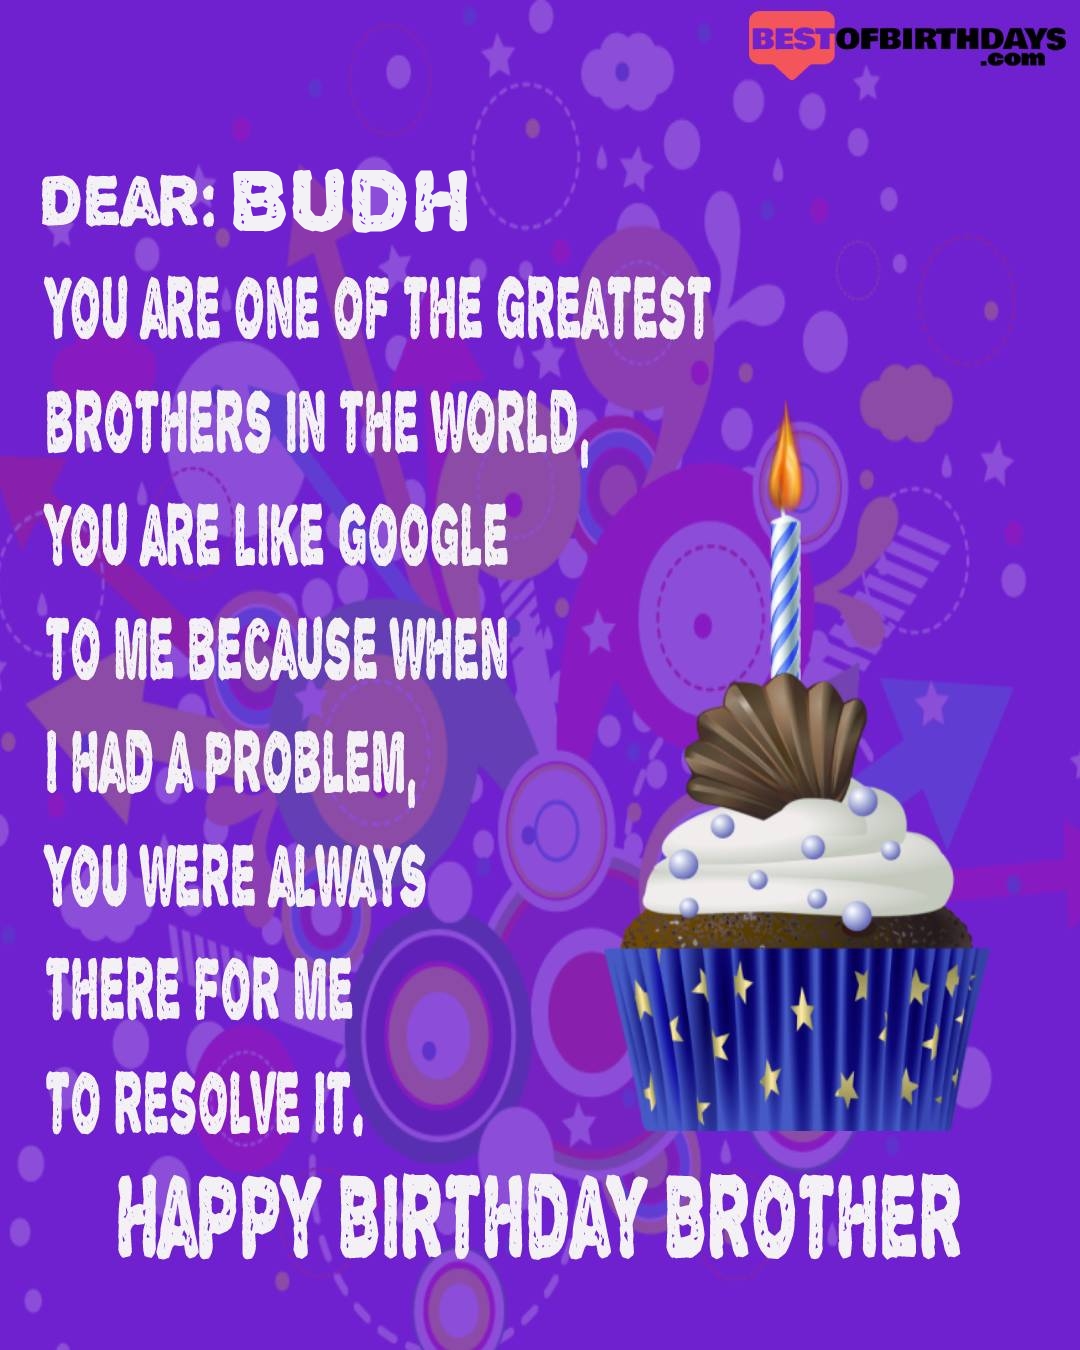 Happy birthday budh bhai brother bro